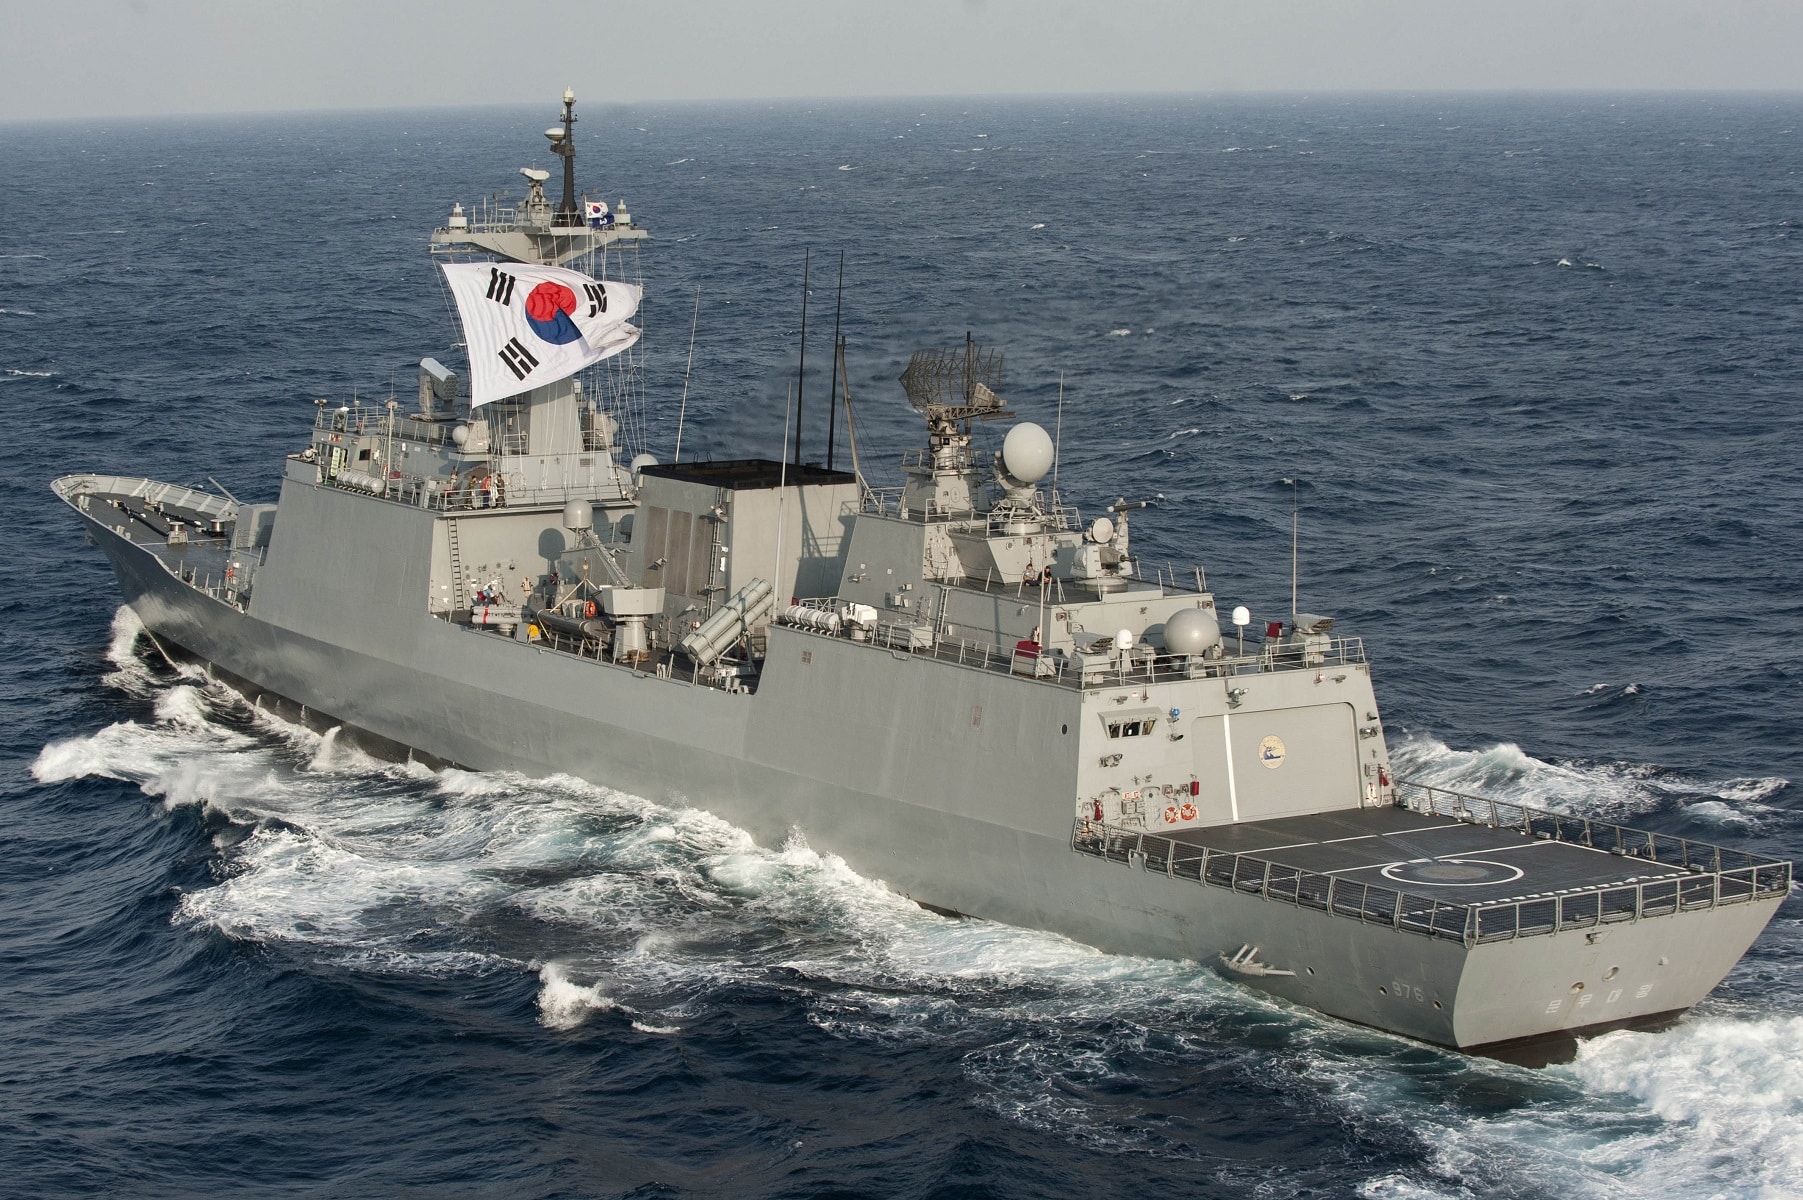 Republic of Korea to develop marine VTOL drone for KDX-II destroyers - $421m allocated for development